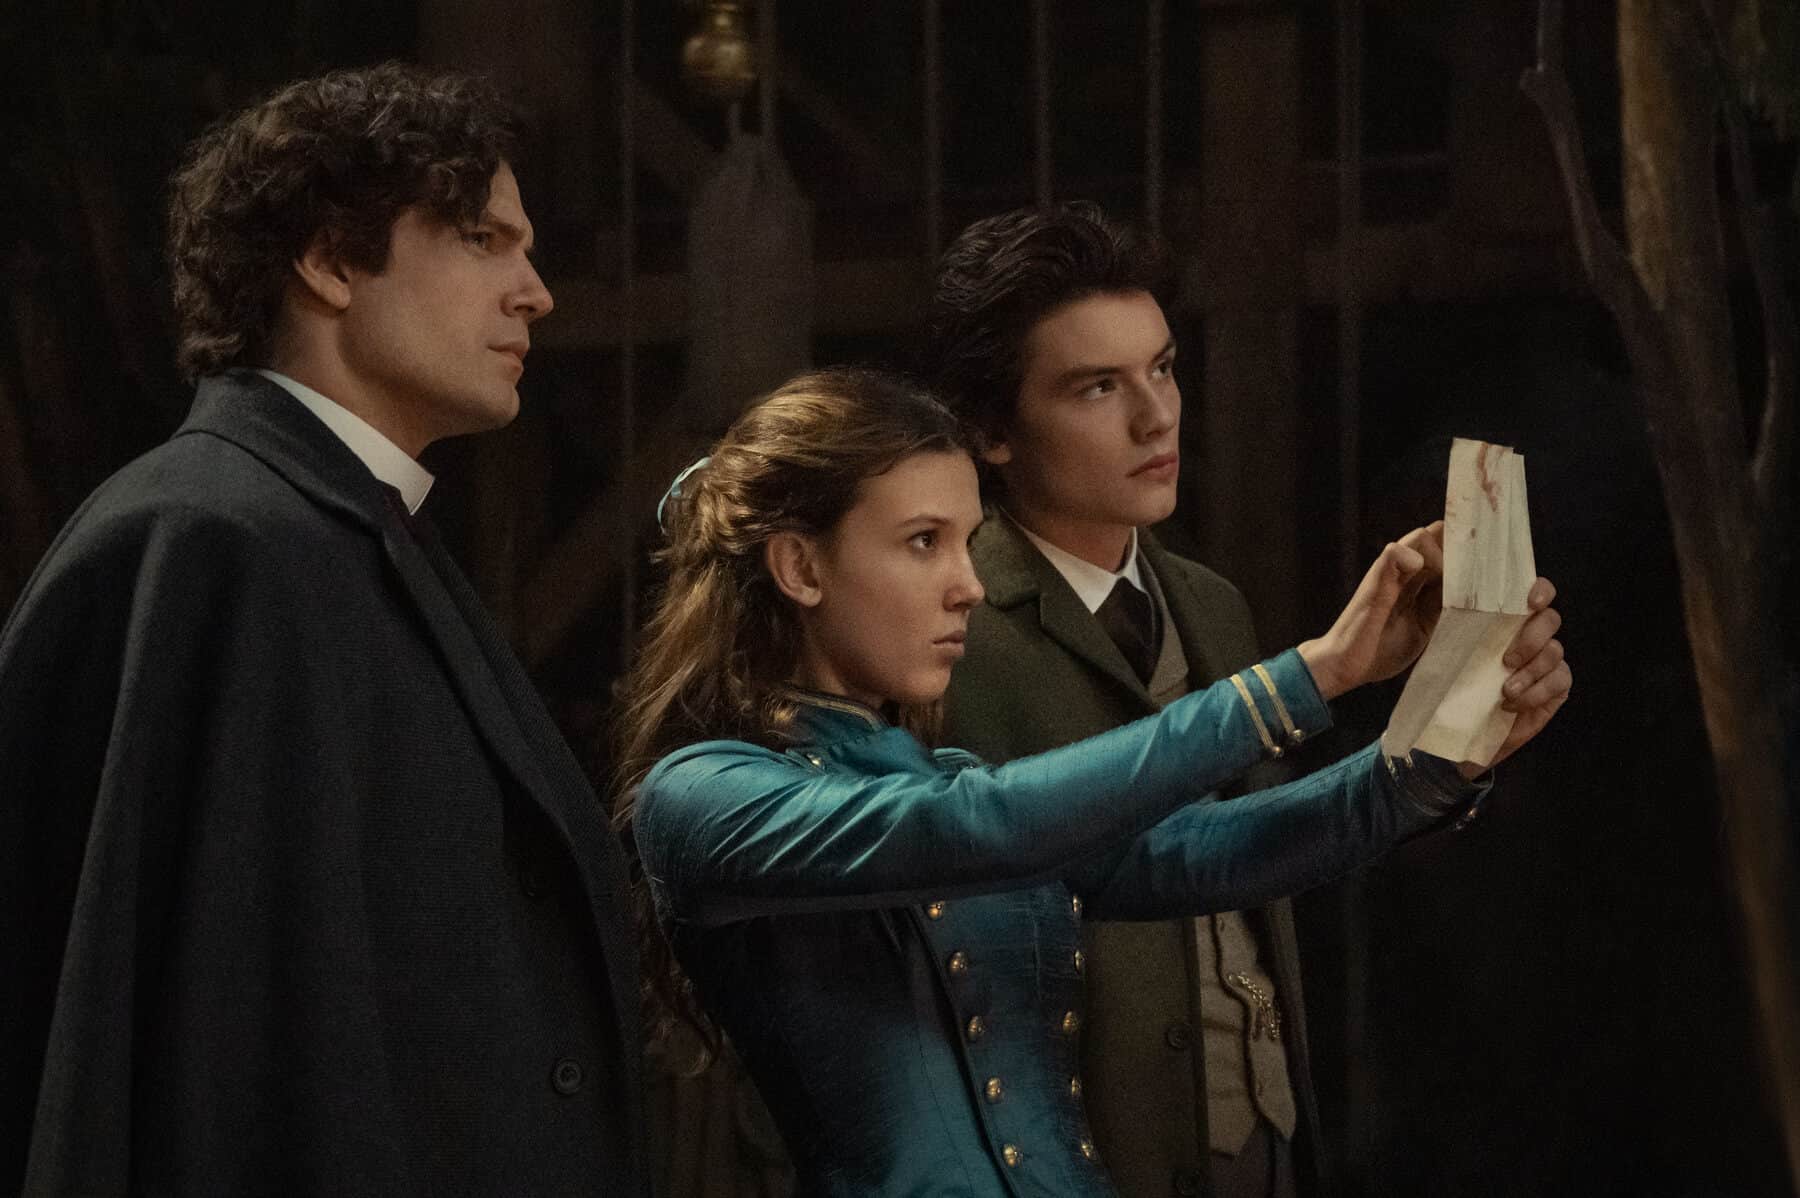 The Holmes siblings and Lord Tewkesbury solving something